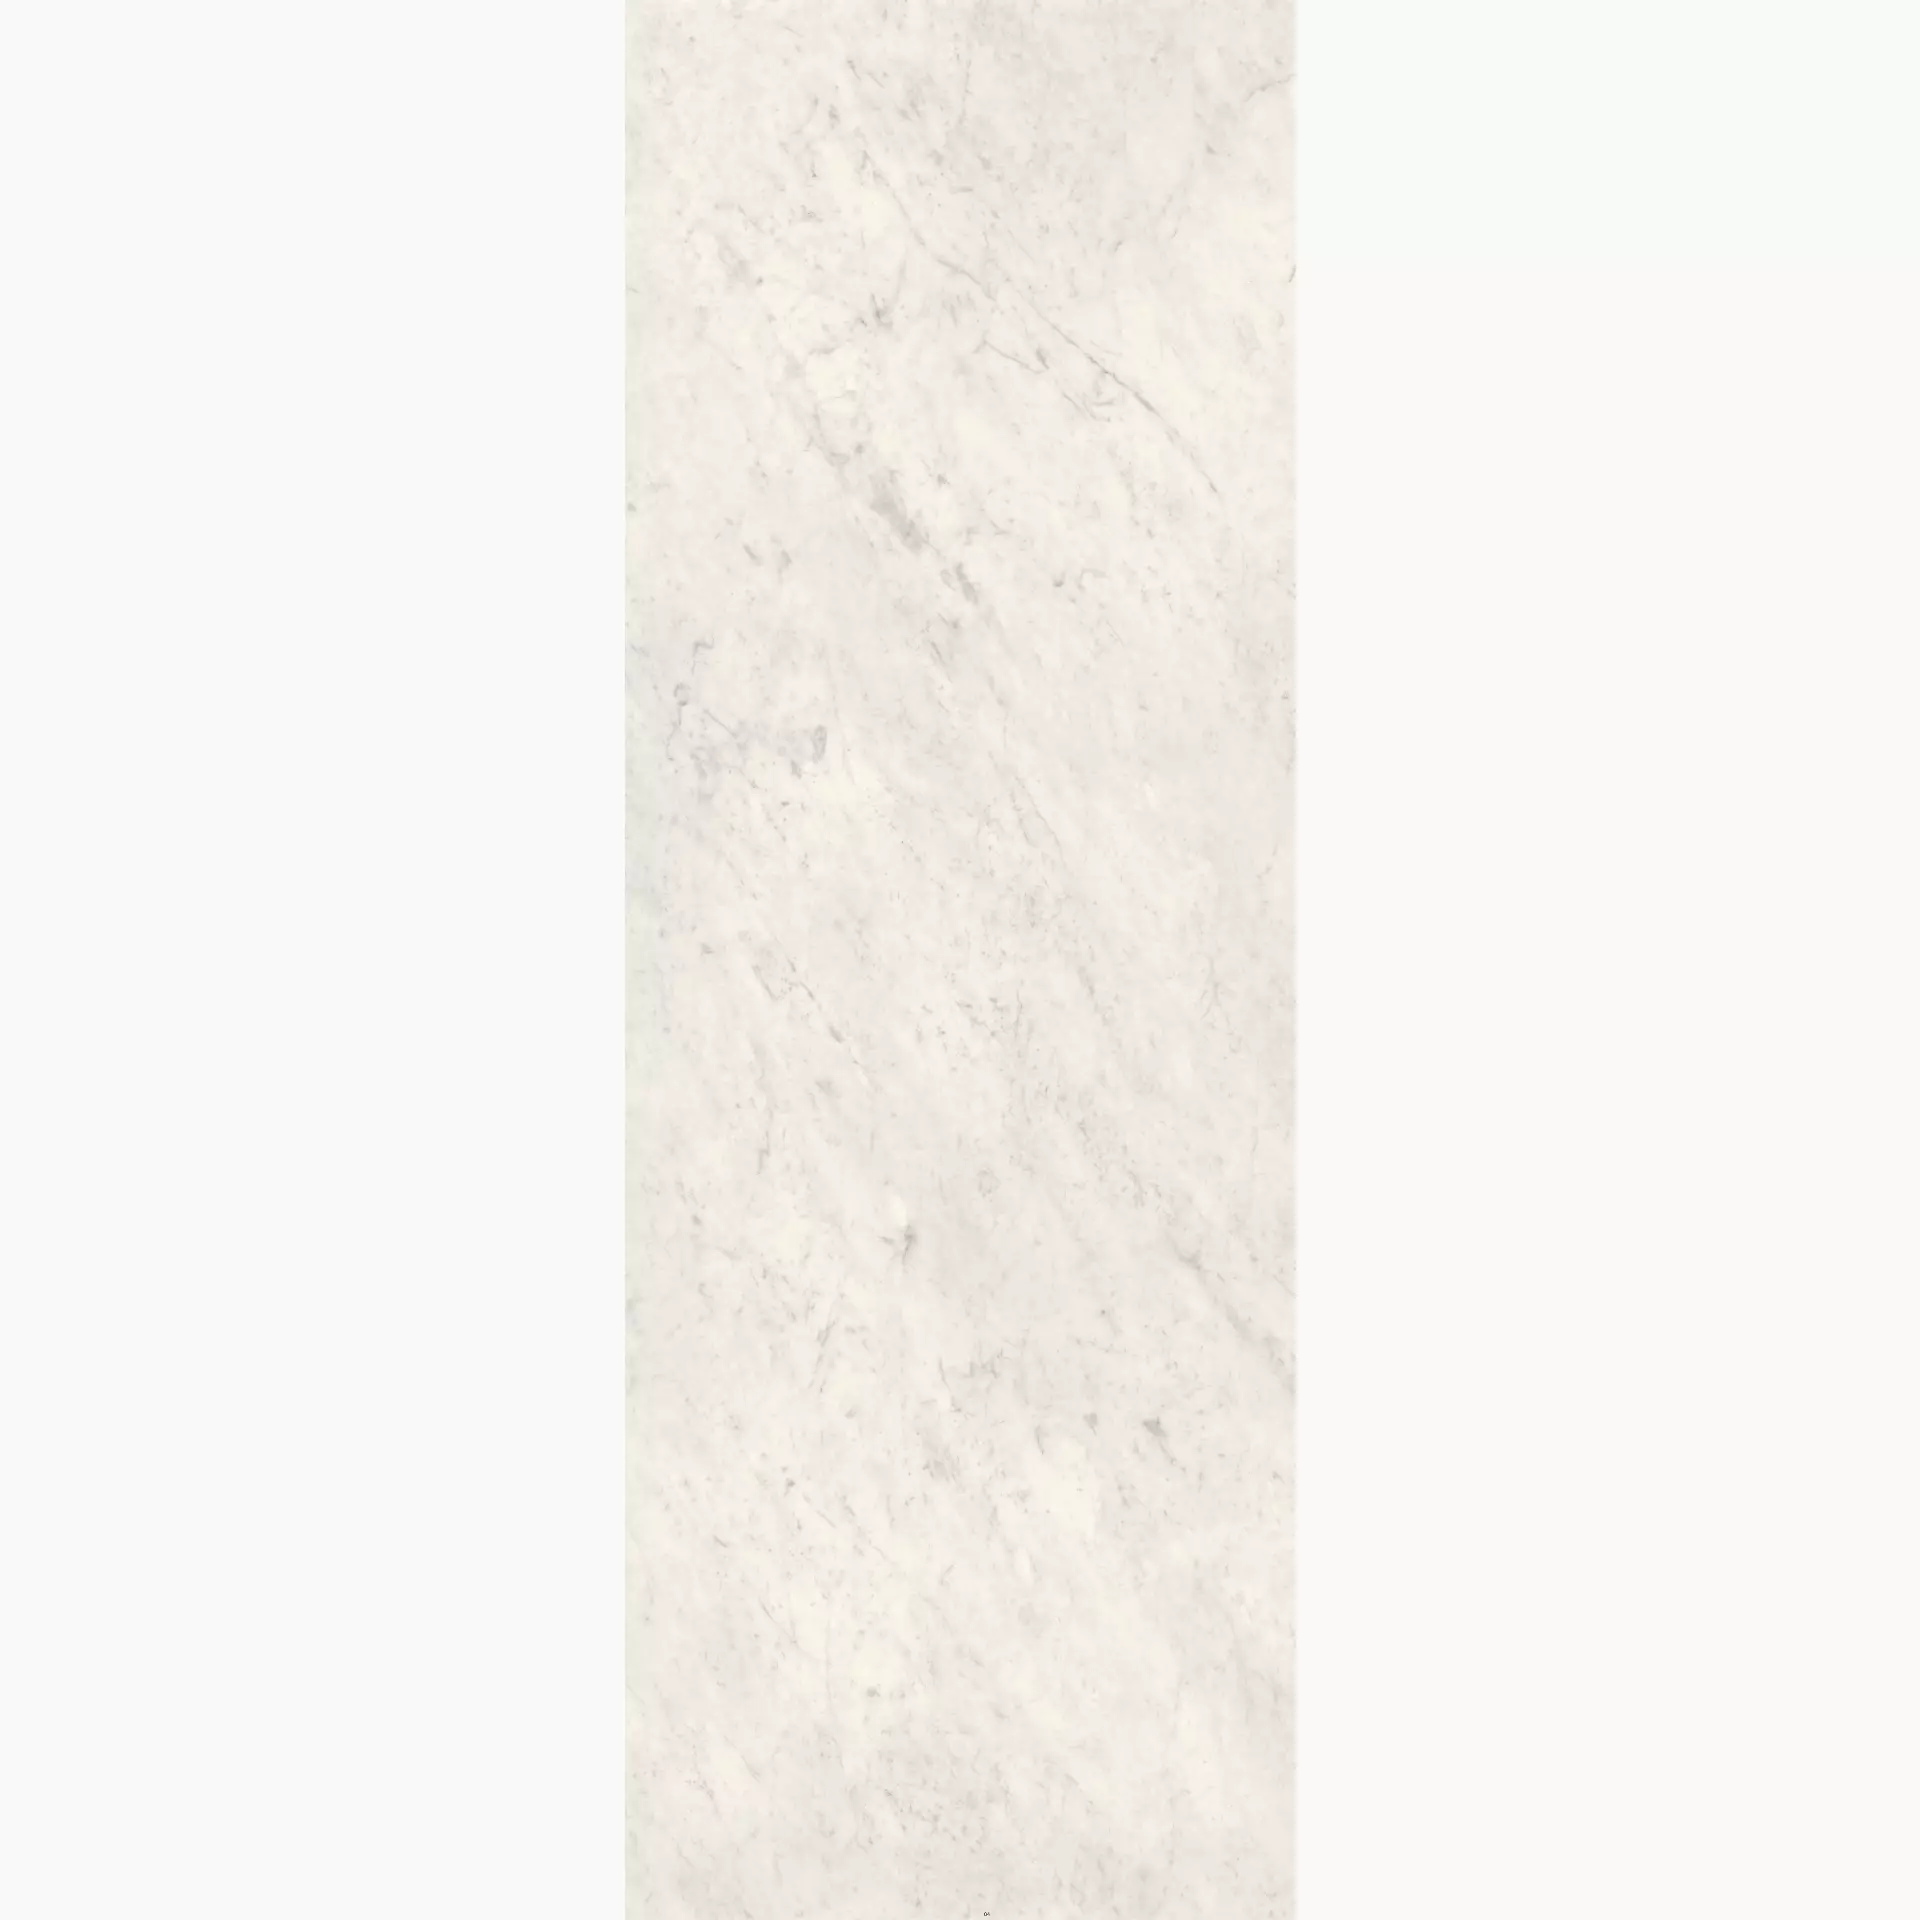 Cottodeste Kerlite Starlight Carrara White Smooth Protect EK7SL30 100x300cm rectified 3,5mm